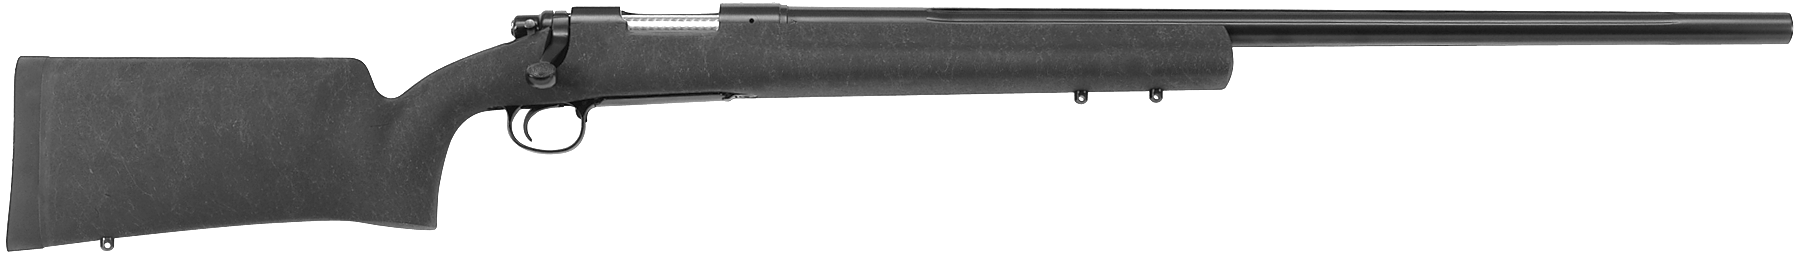 40XB Tactical Rifle